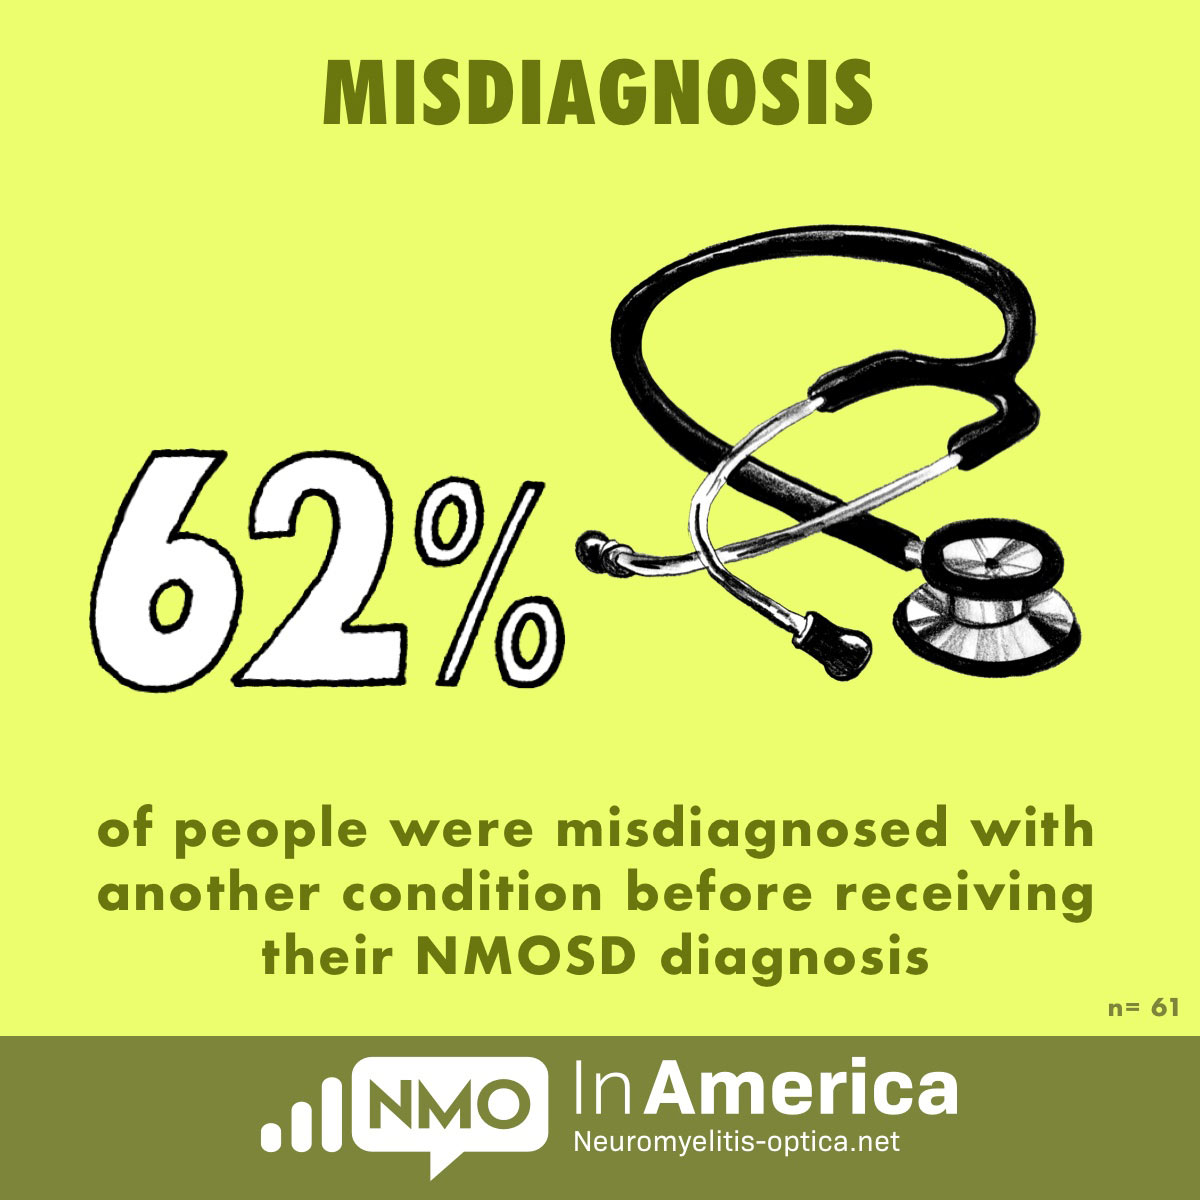 62% were misdiagnosed